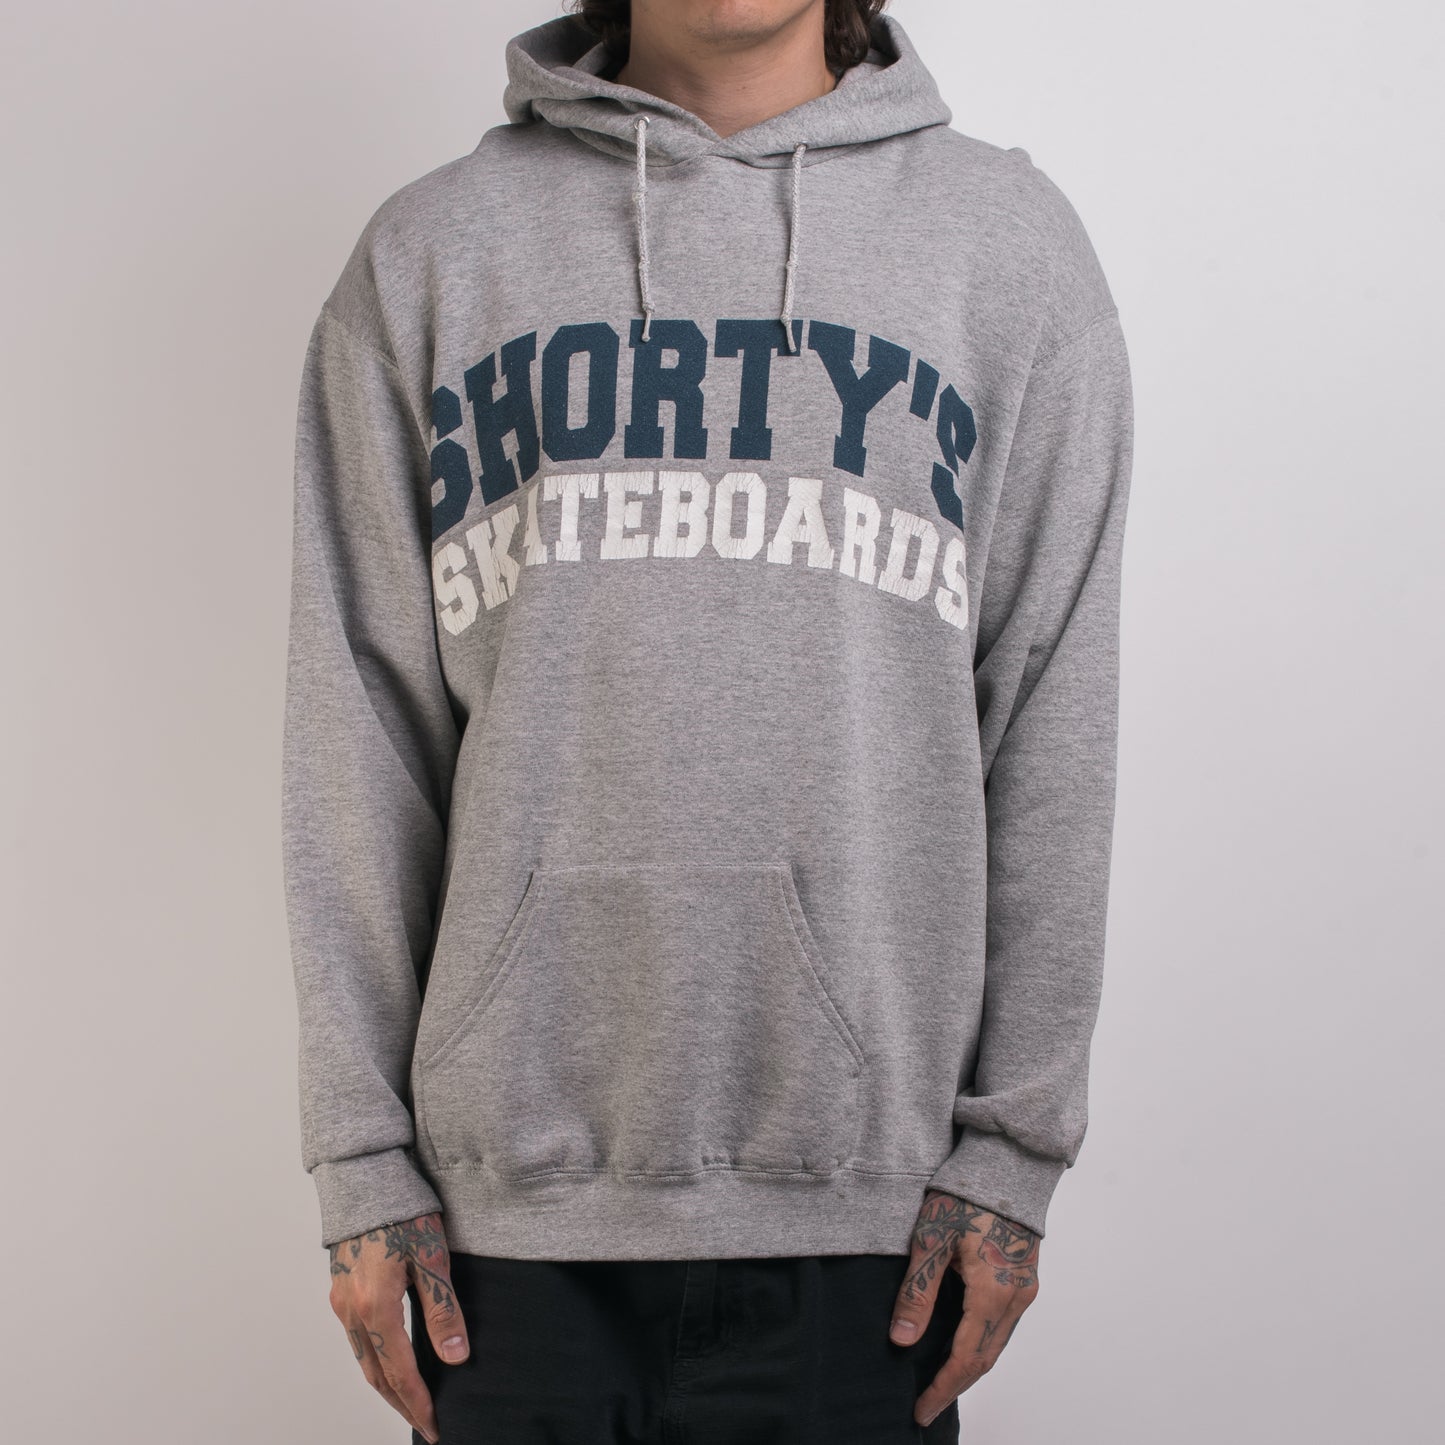 UnderdogStore Vintage Shortys Skateboards 90s Sweatshirt